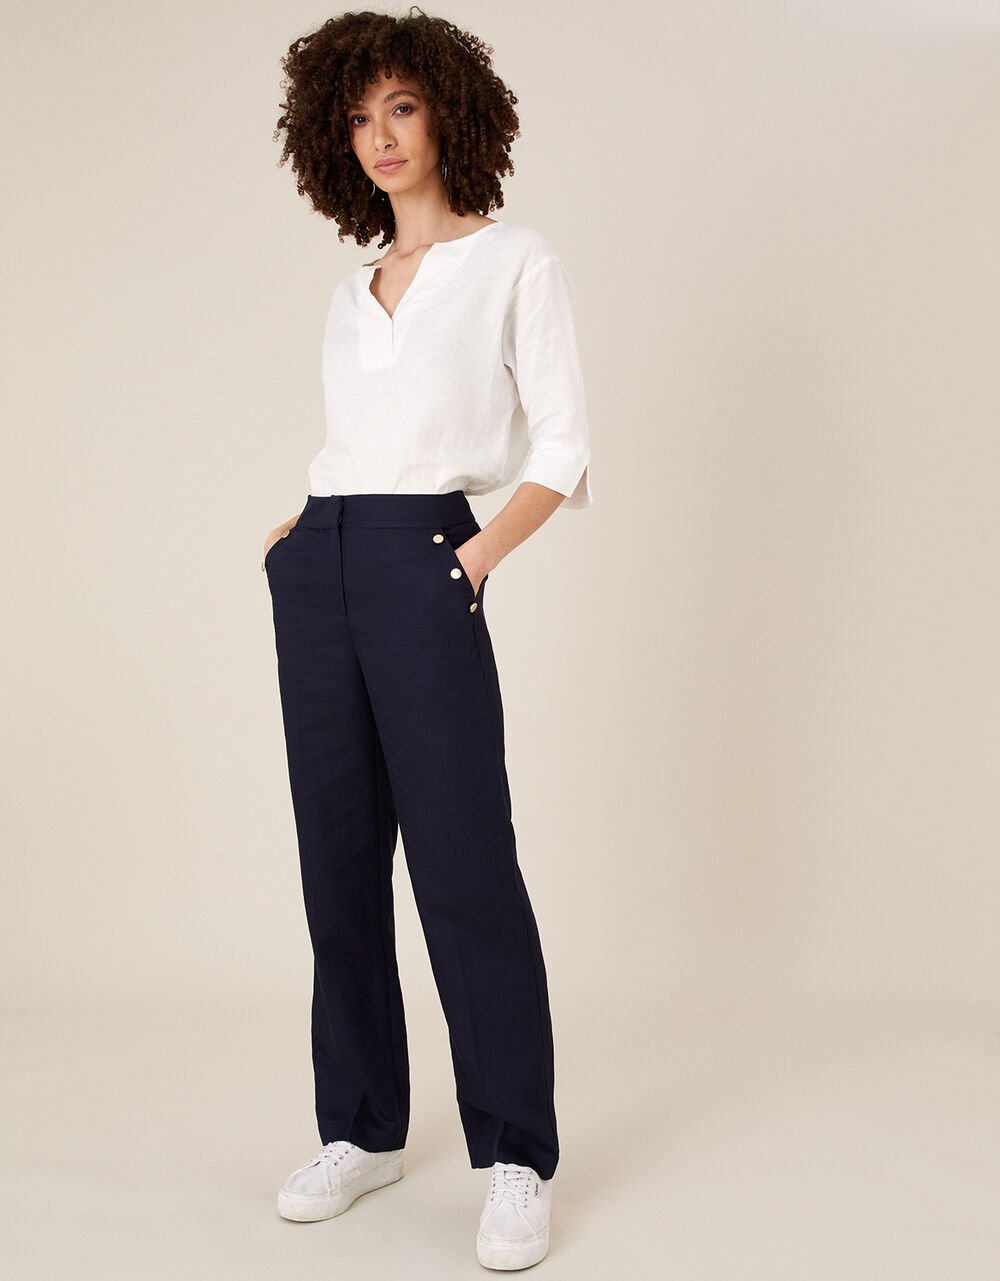 Women Women's Clothing | Smart Shorter Length Trousers in Linen Blend Blue - NO40559